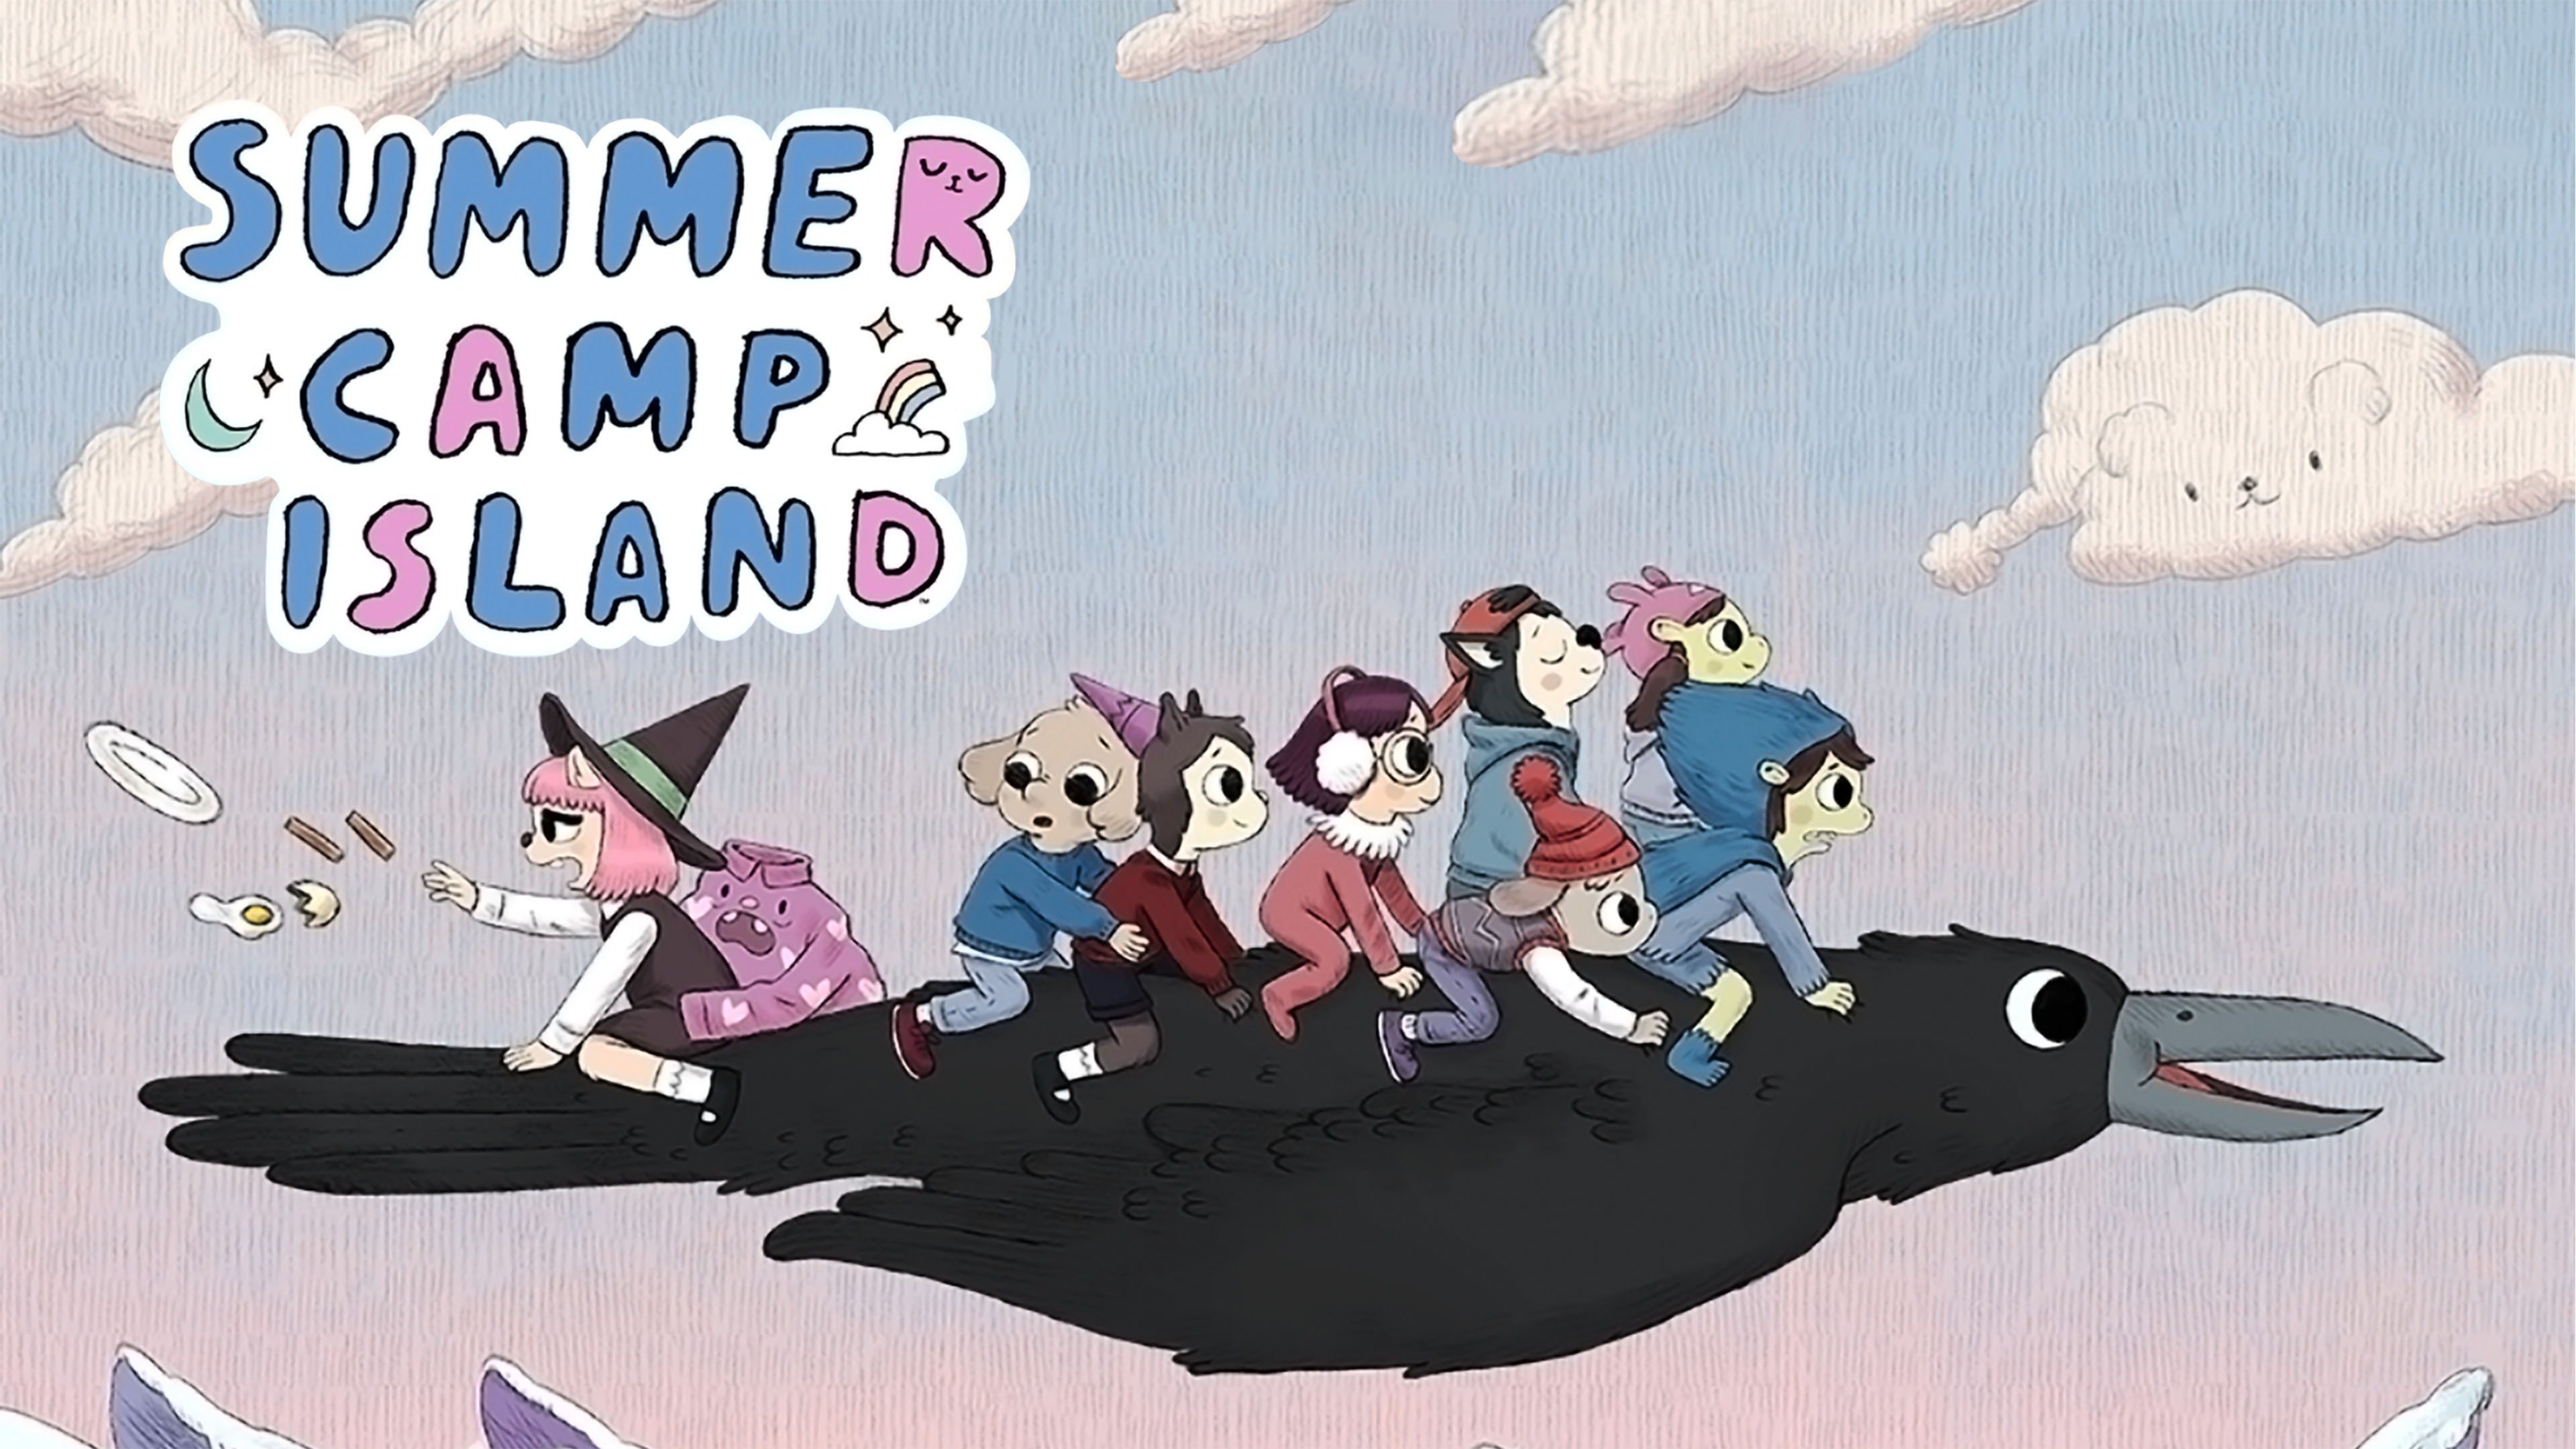 Assistir Summer Camp Island - ver séries online